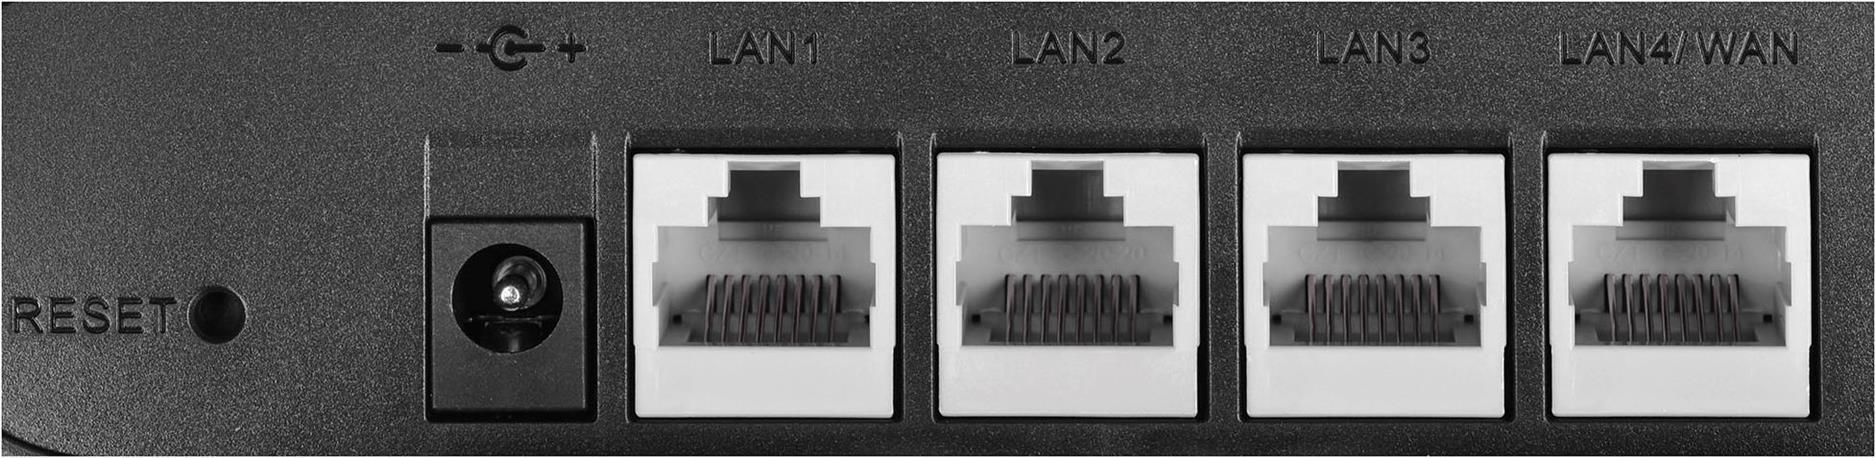 B532-232a LTECat.7 Rohkabel CPE VAN 3GPP Release 11 LAN IEEE 802.3/802.3u WIFI (B535-232a)